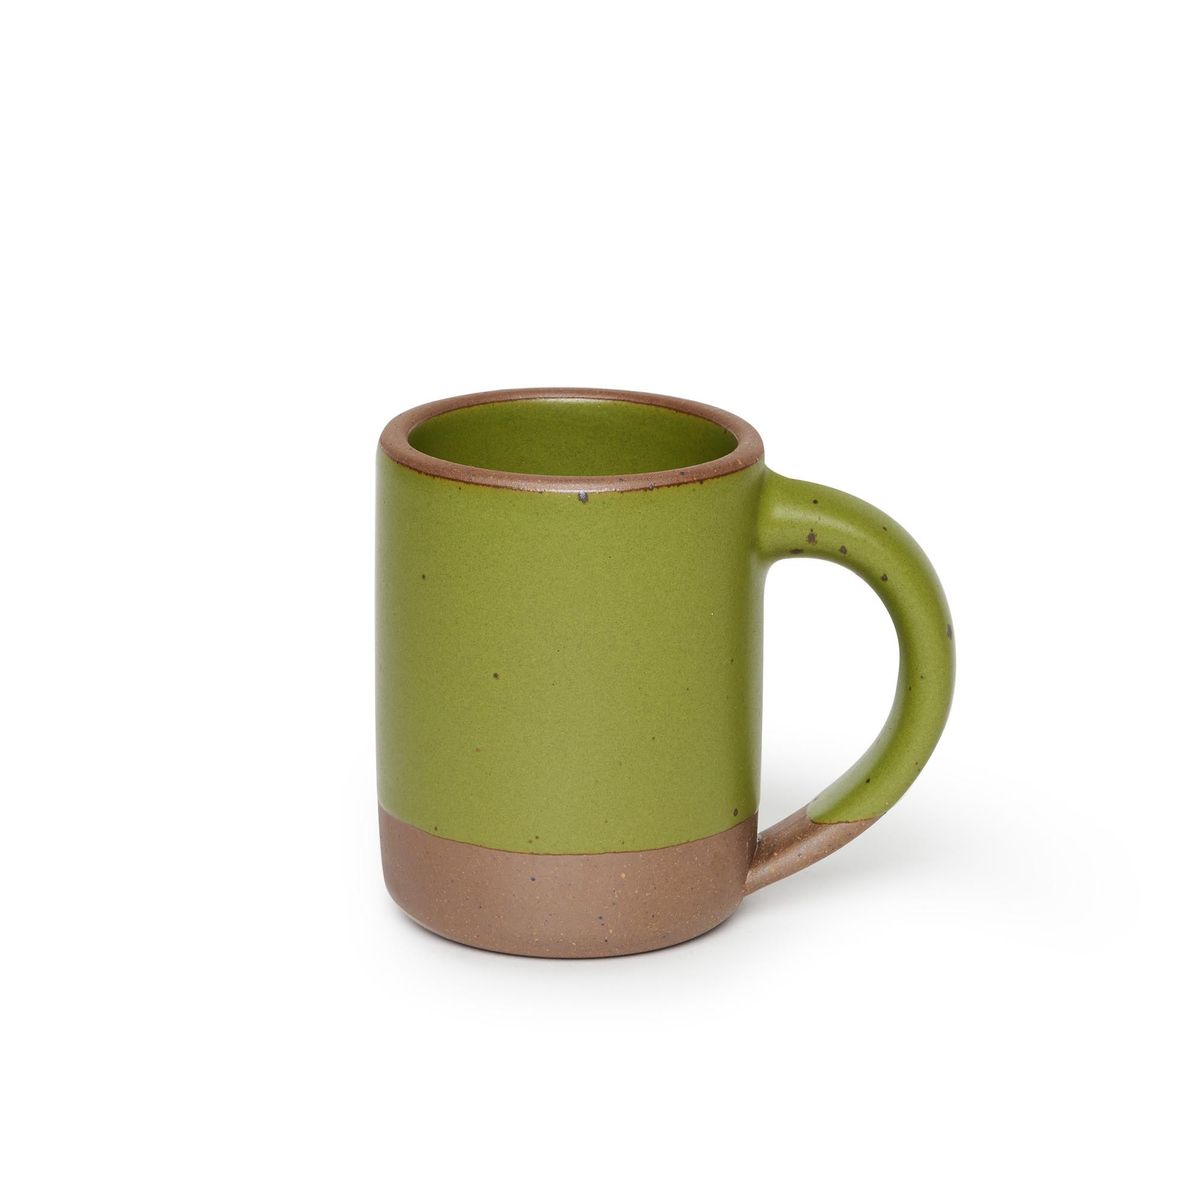 The Mug in Fiddlehead, a mossy, olive green. 